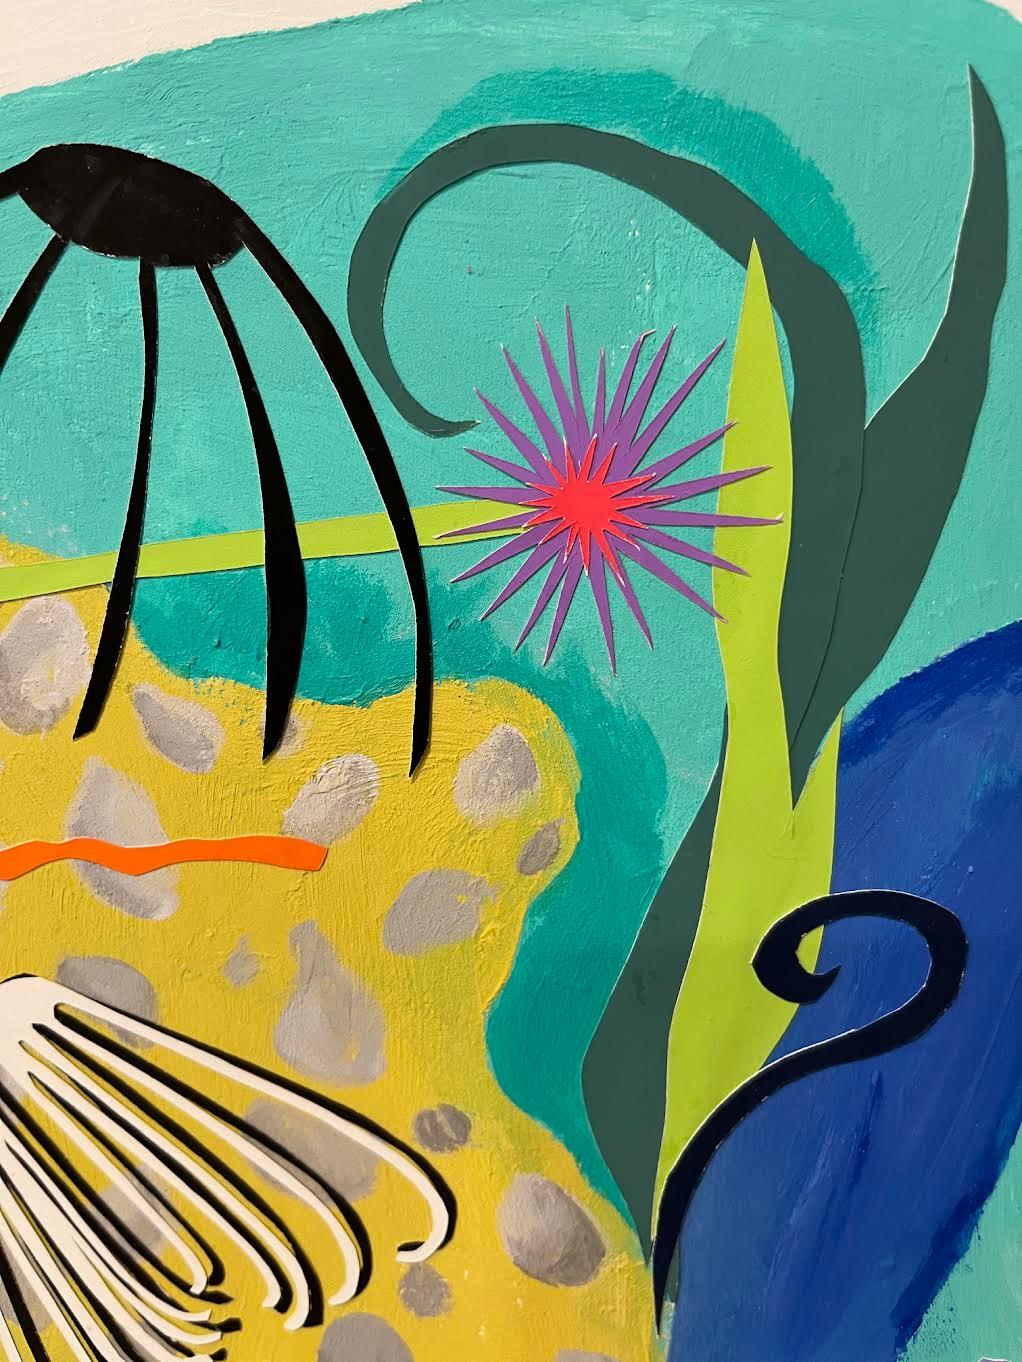 Seabrush Romp, colorful, undersea scene, aquatic , whimsical creatures playful - Contemporary Mixed Media Art by Philomena Marano